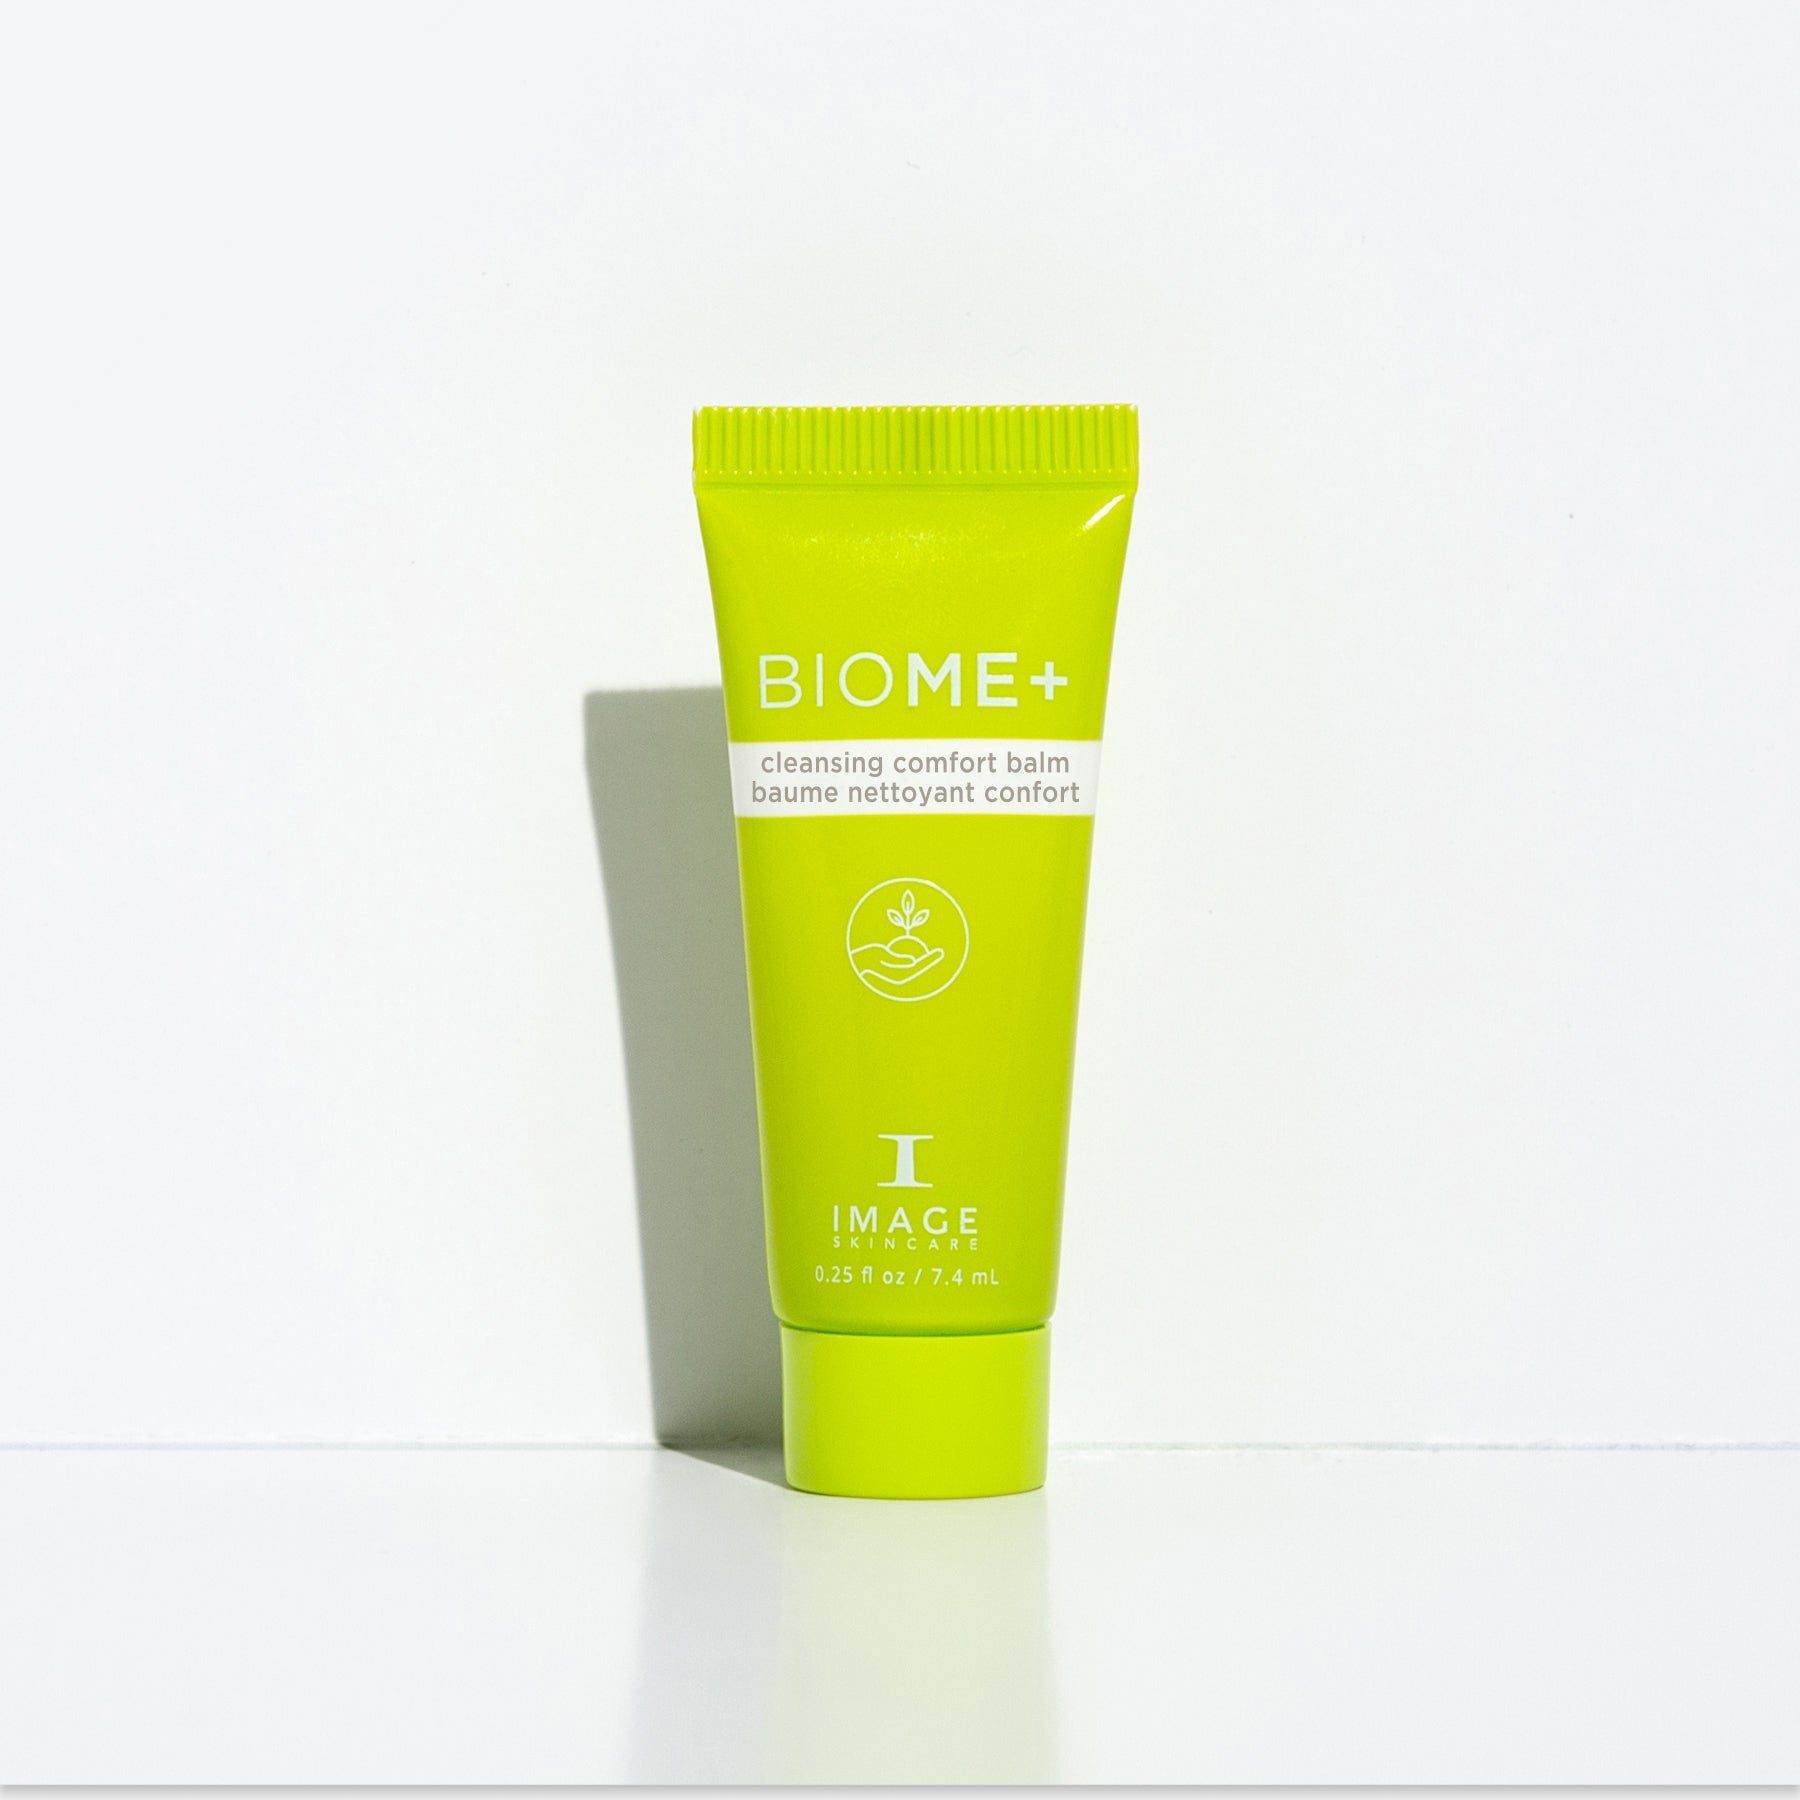 BIOME+ cleansing comfort balm sample – Image Skincare